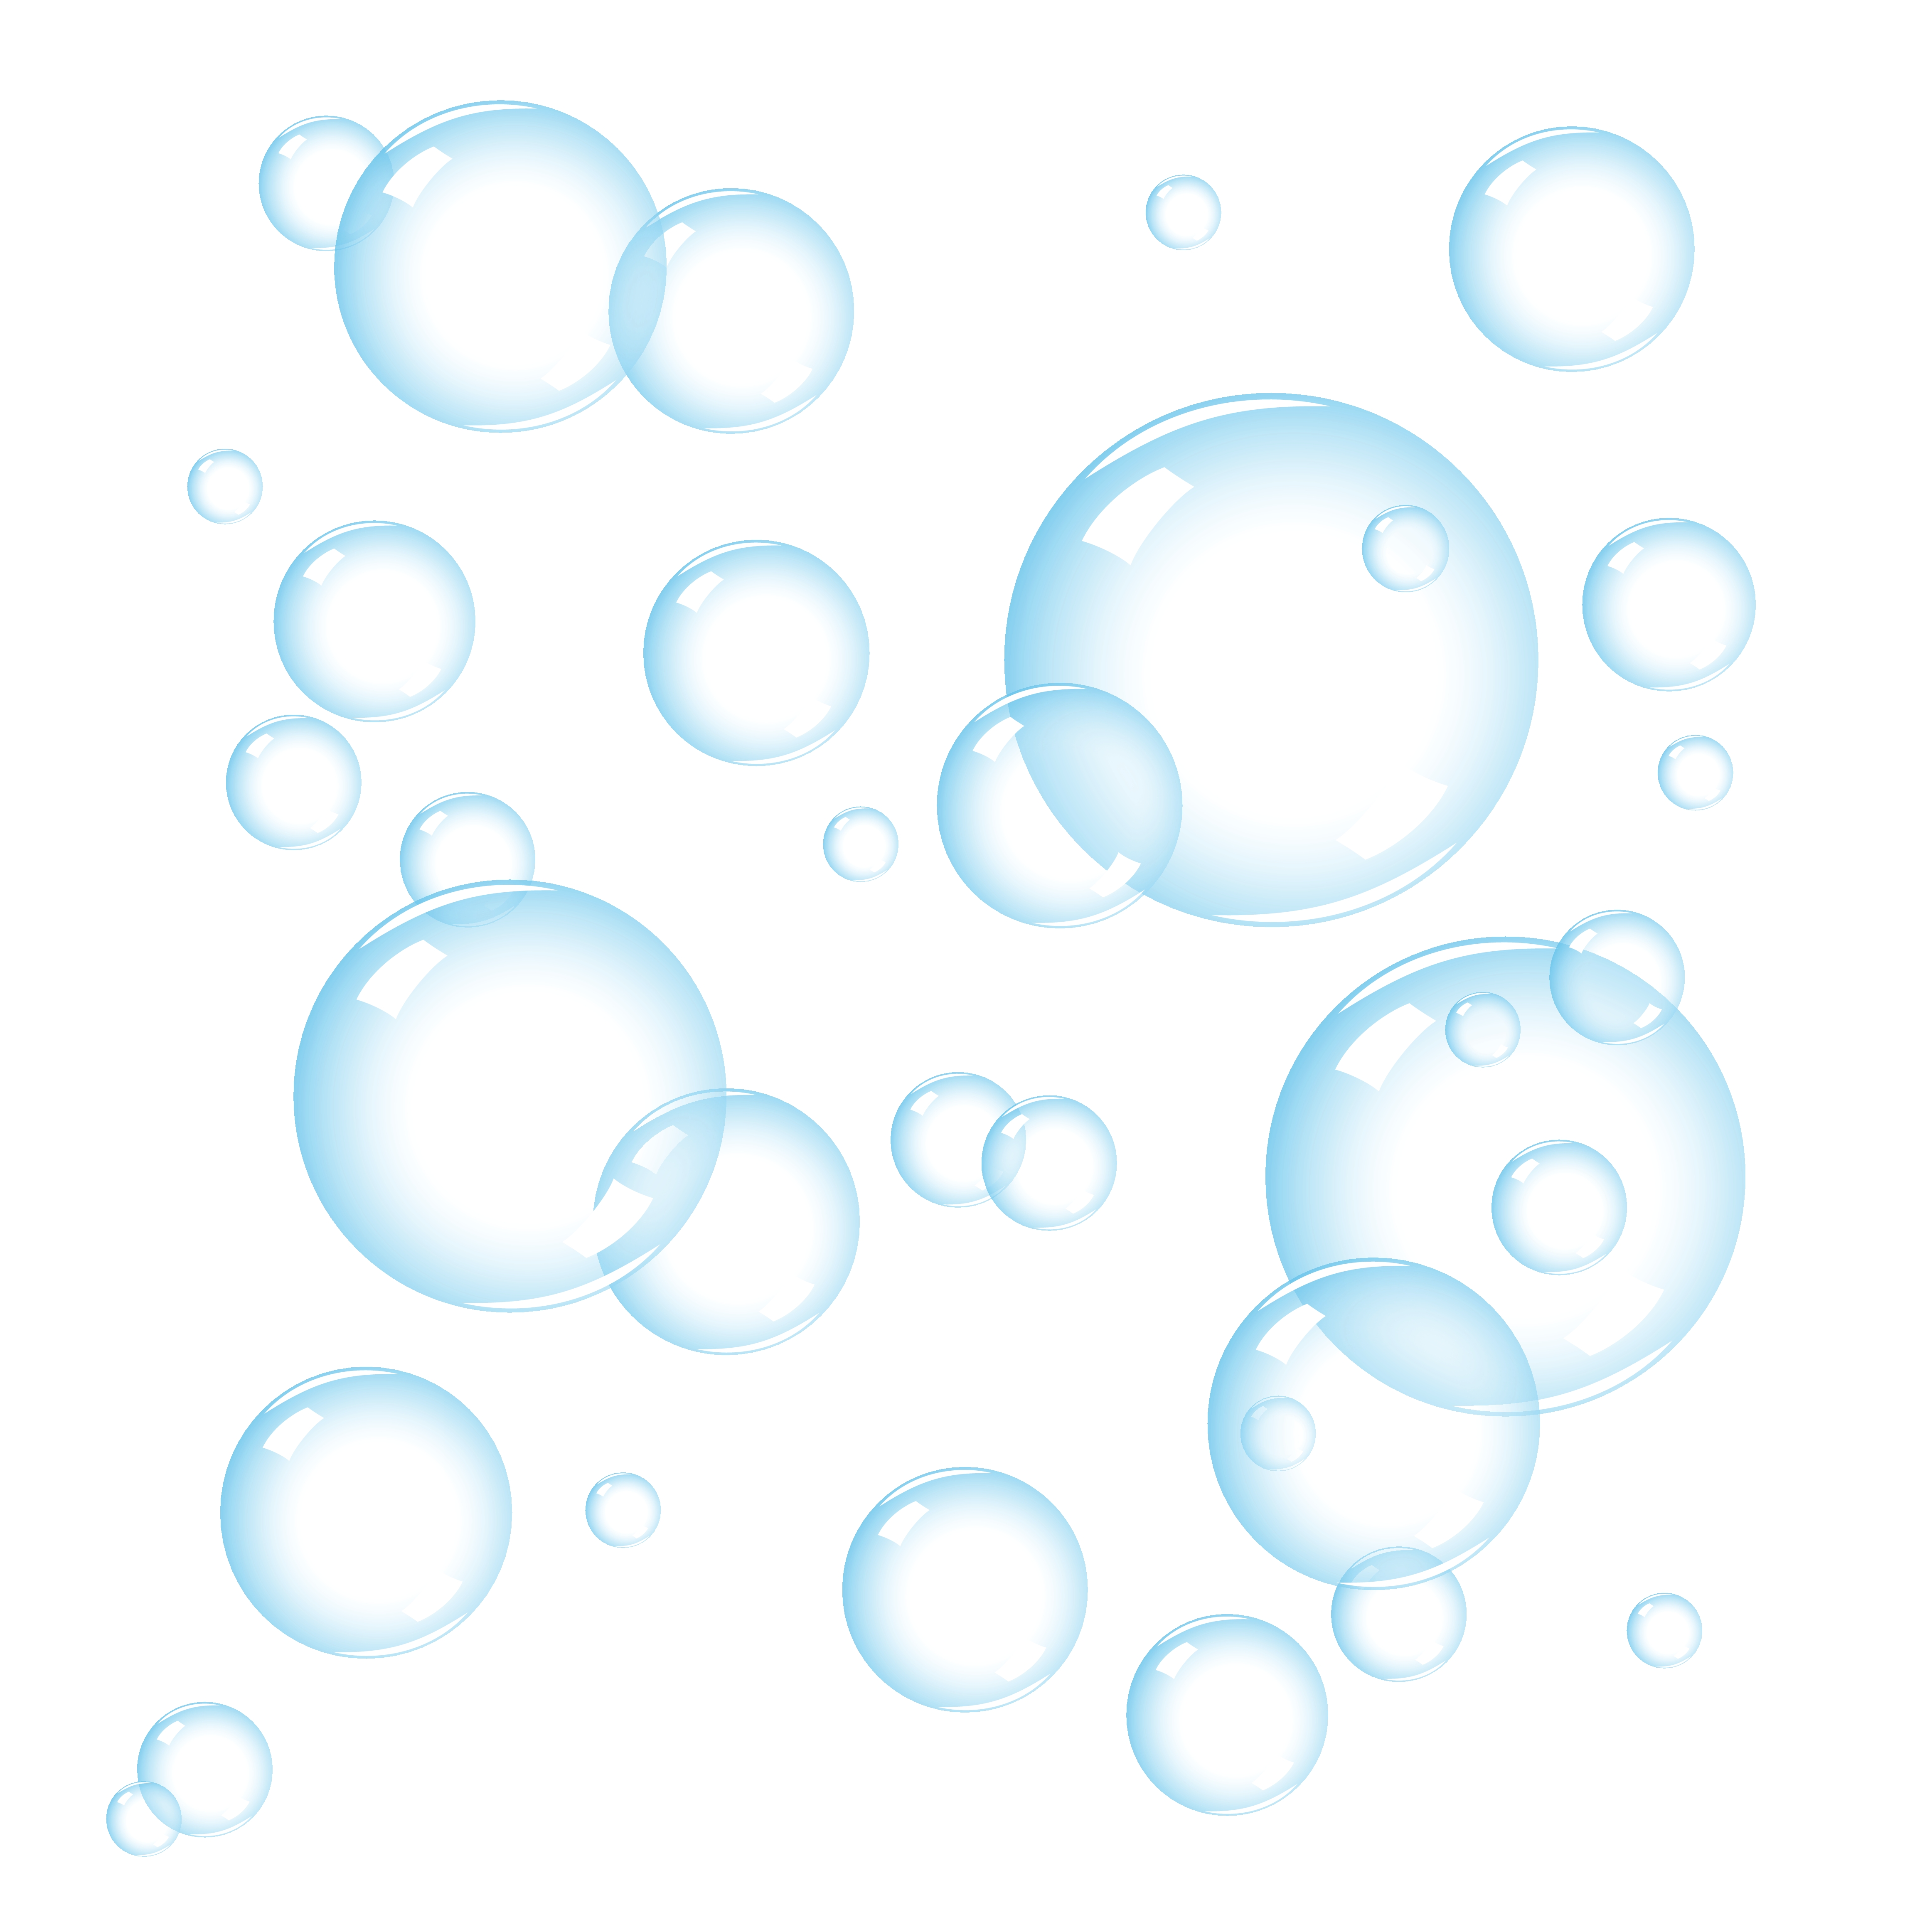 Bubbles cliparts